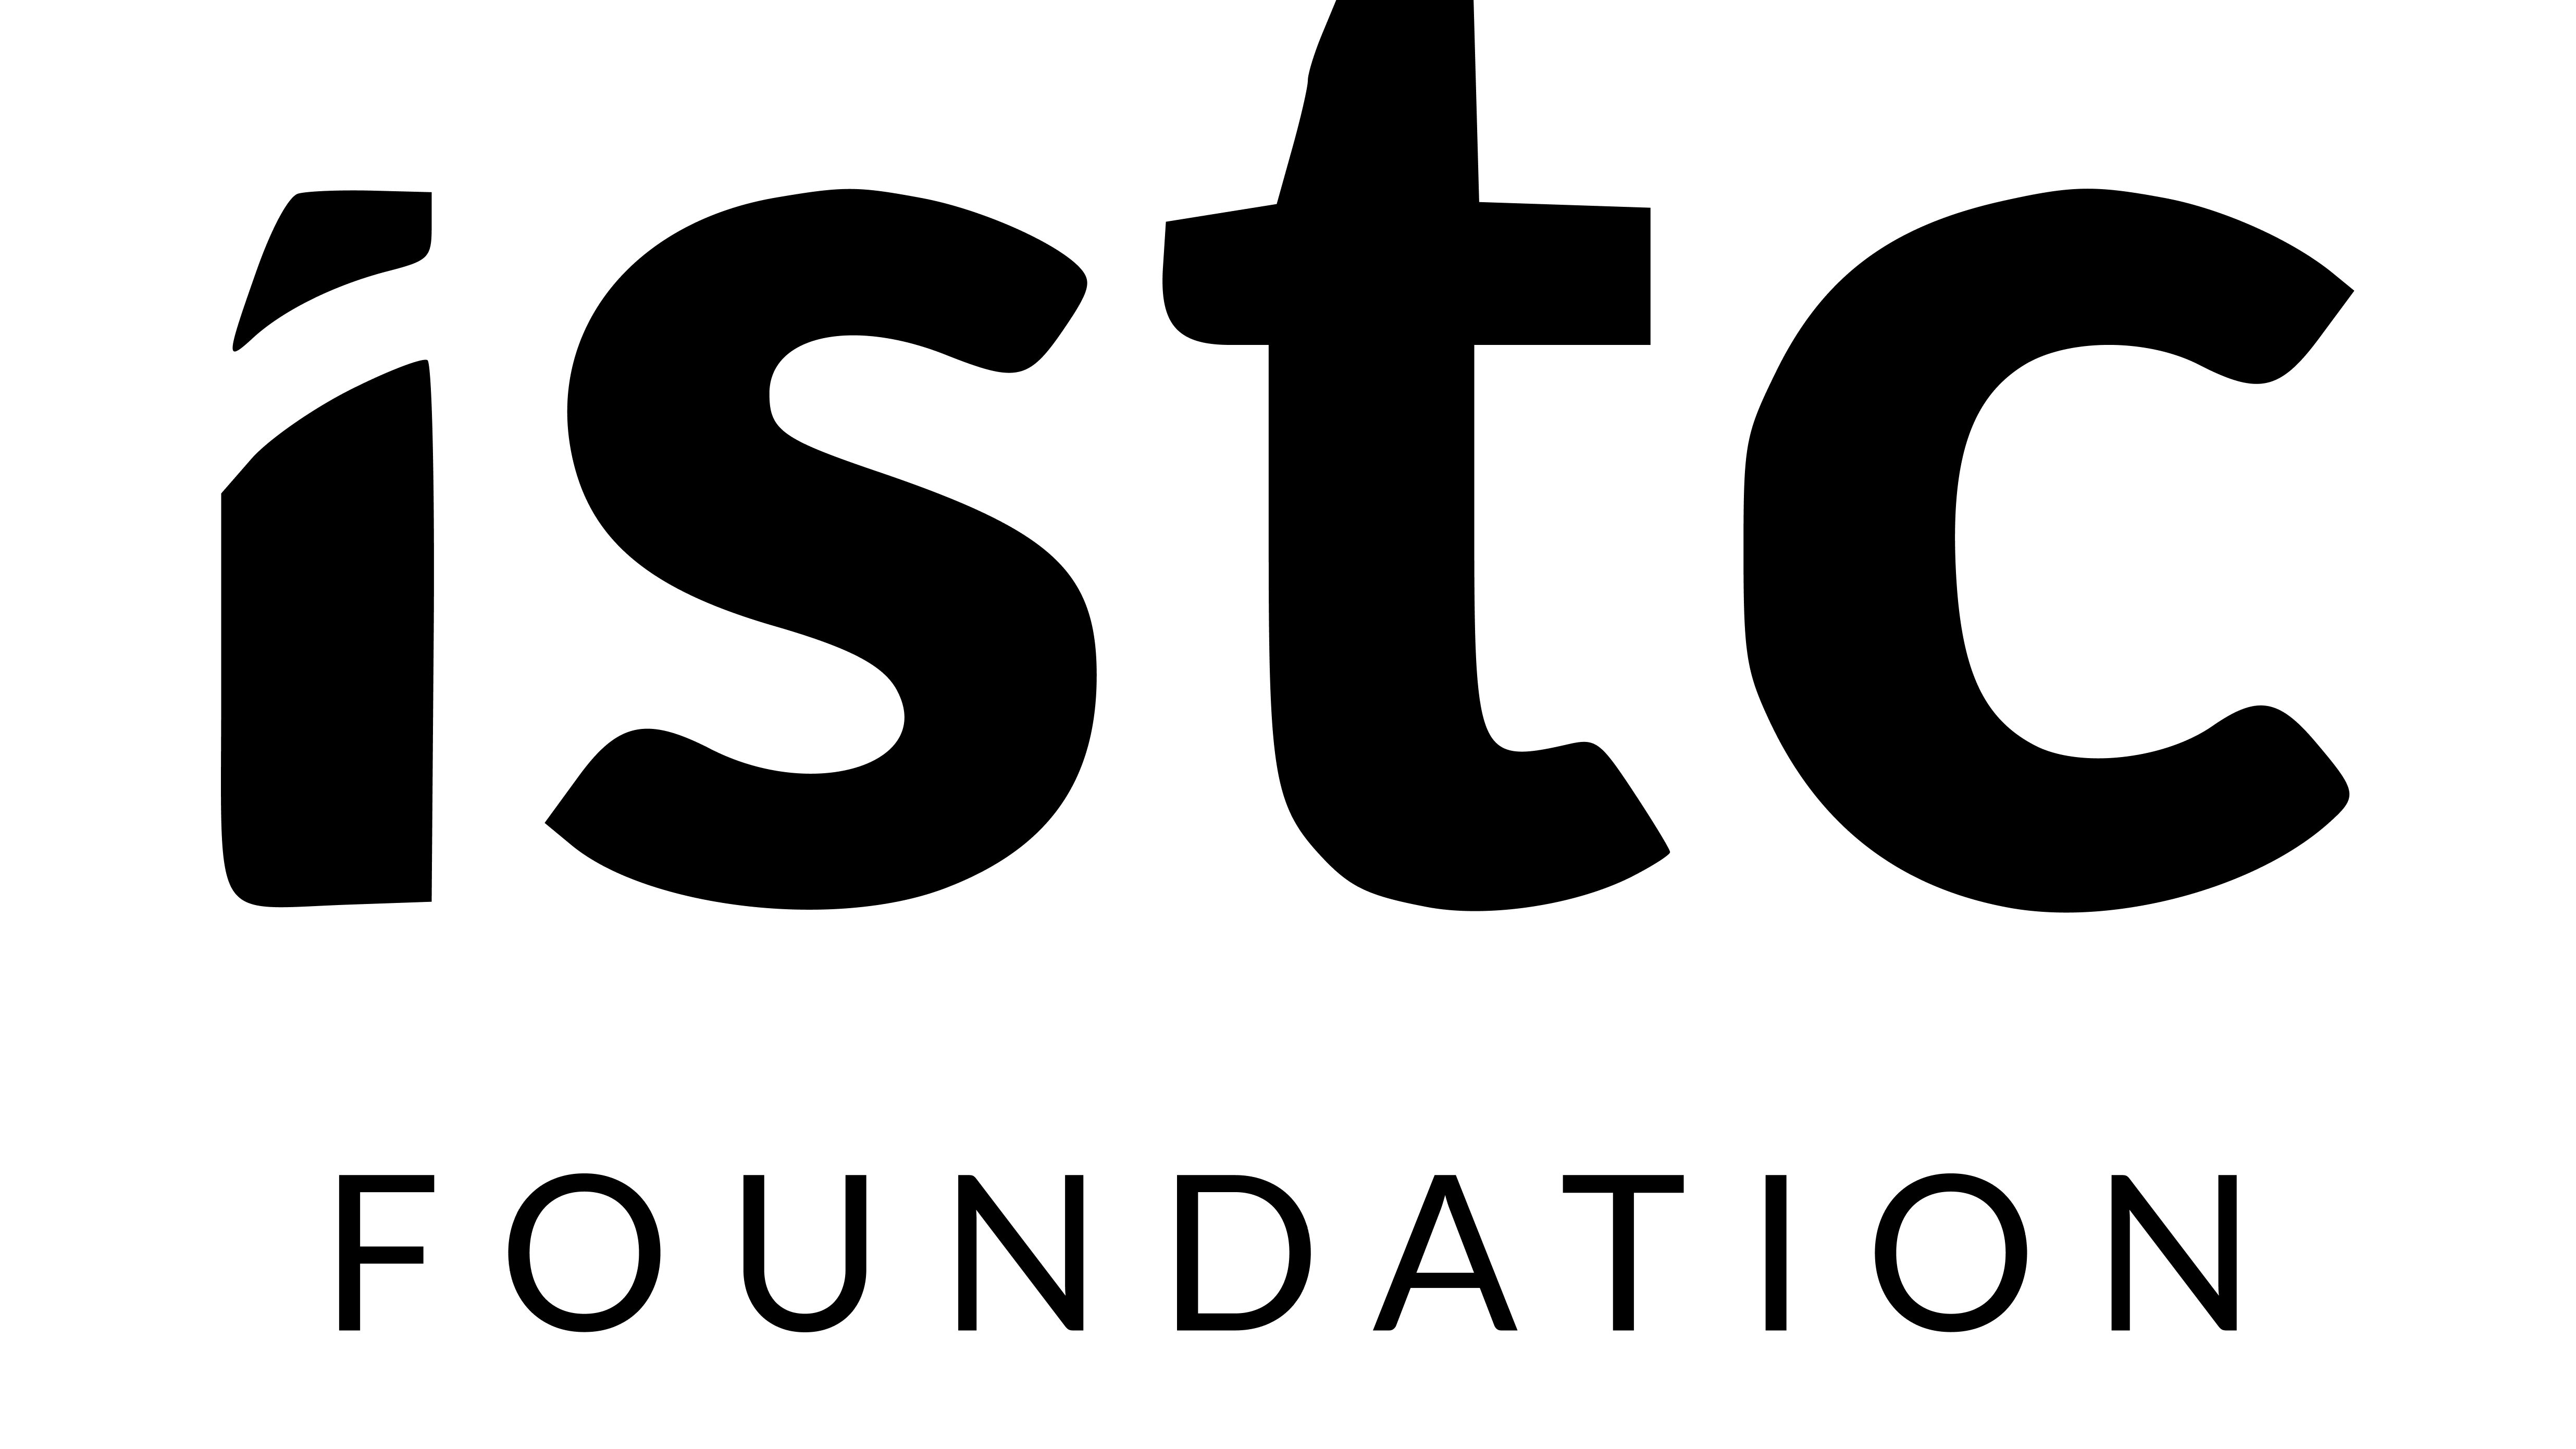 4614-istc-black-logo16x9.png